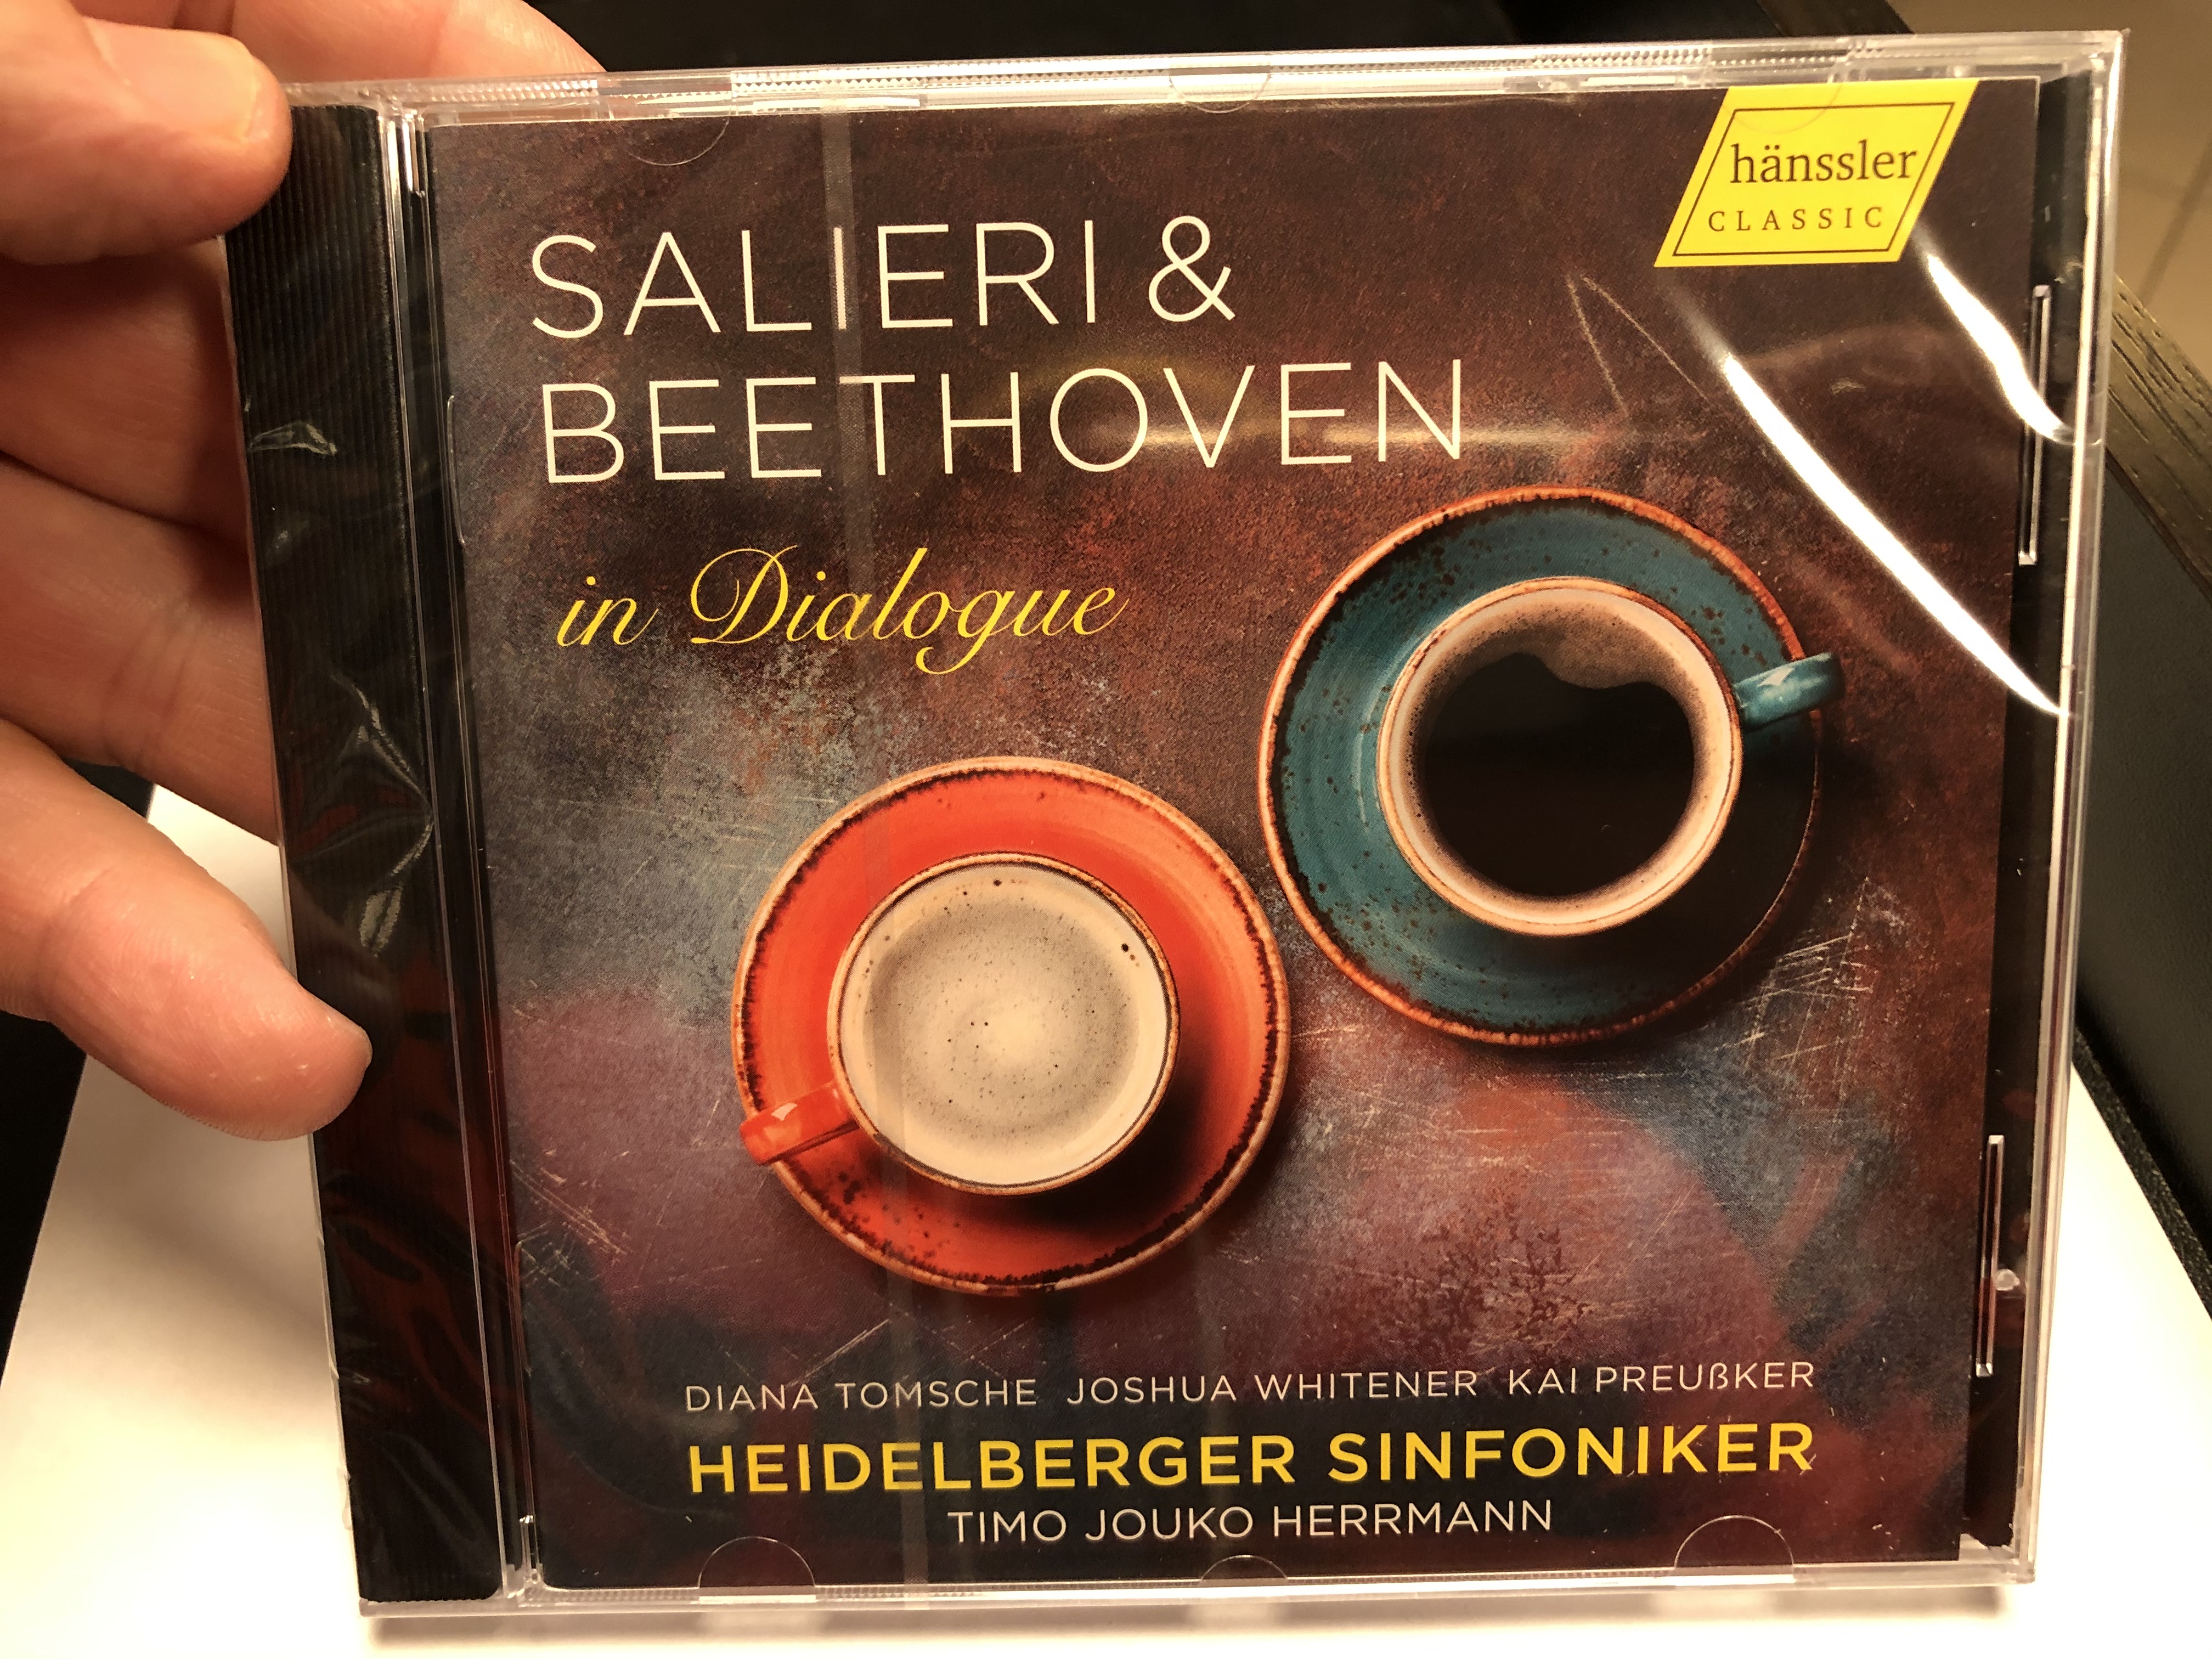 salieri-beethoven-in-dialogue-diana-tomsche-joshua-whitener-kai-preusker-heidelberger-sinfoniker-timo-jouko-herrmann-hanssler-classic-audio-cd-2020-hc20067-1-.jpg